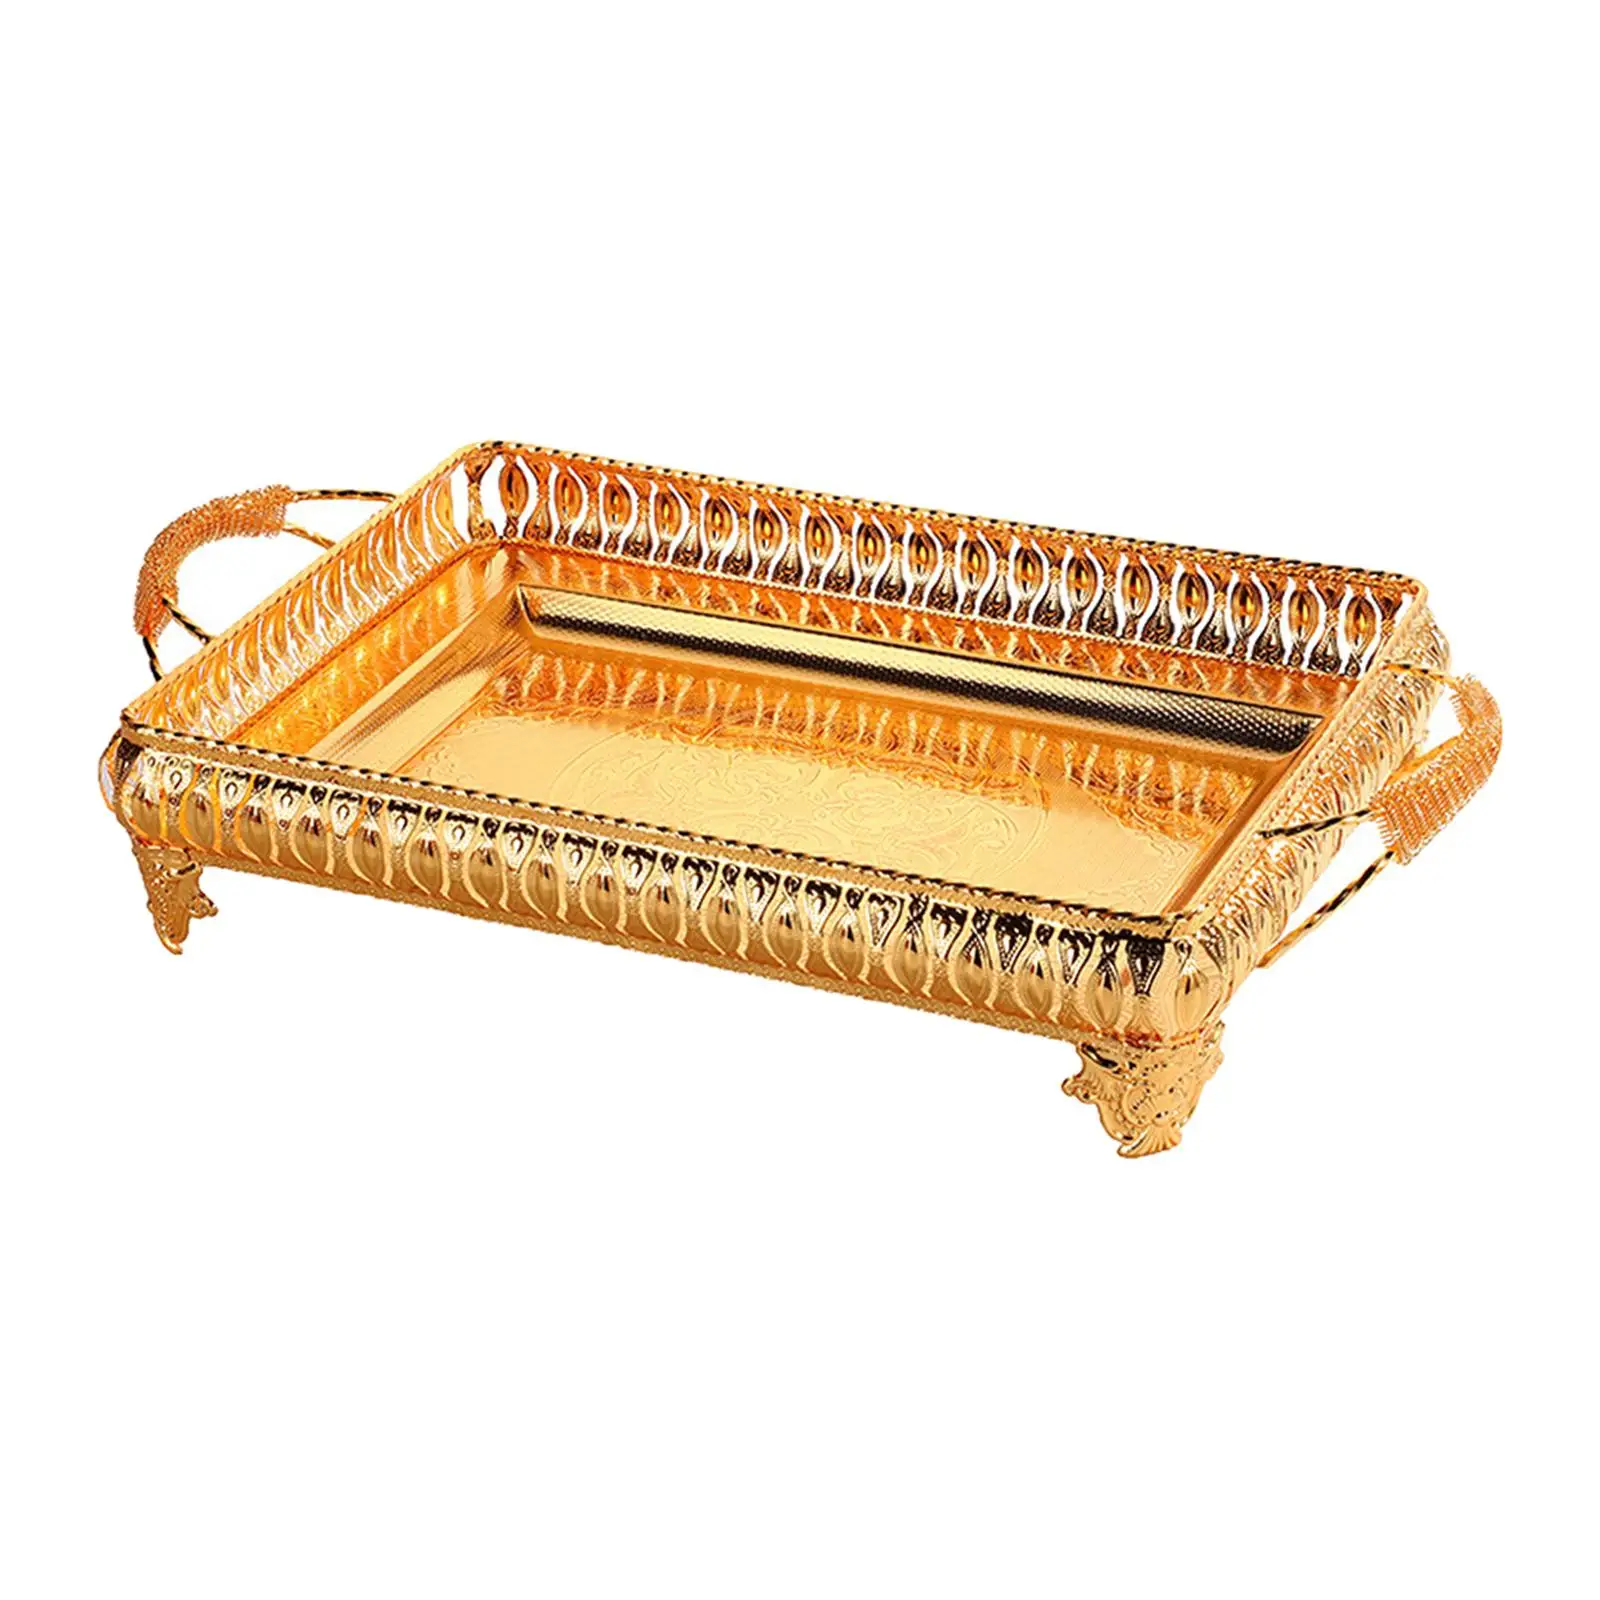 Golden Fruit Tray Lightweight Sundries Display Plate Bathroom Vanity Tray Snack Tray for Bar Living Room Dining Room Home Desk